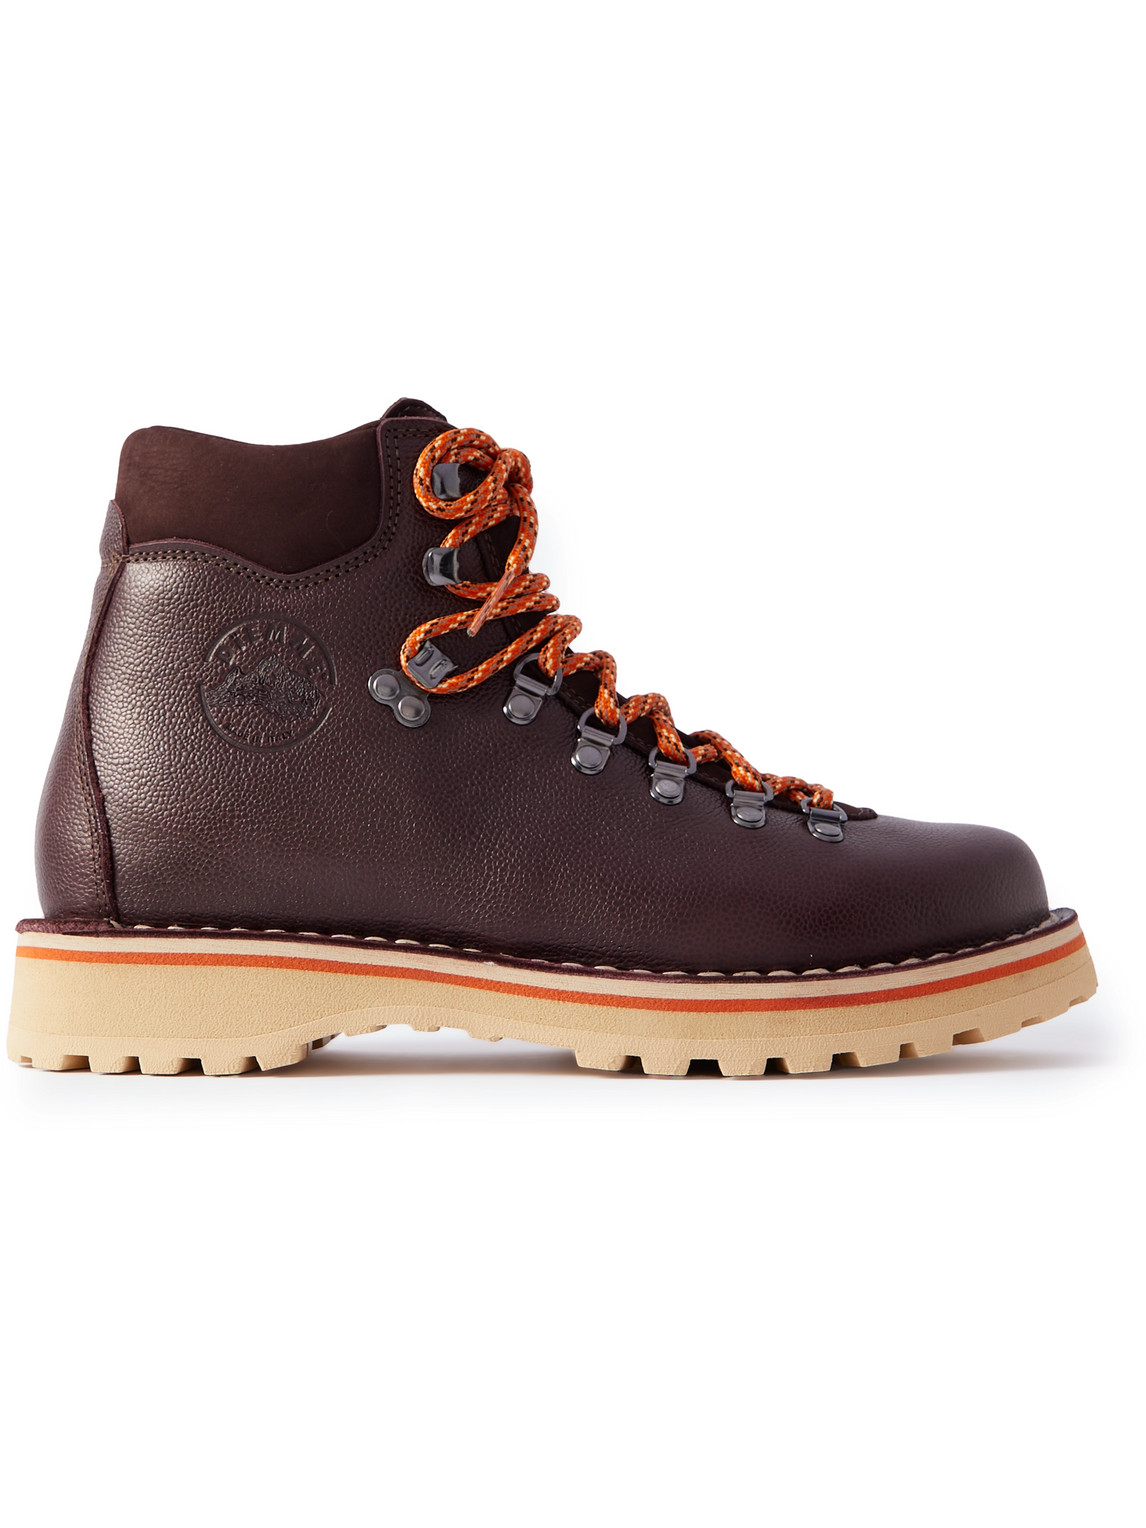 Diemme Roccia Vet Full-Grain Leather Hiking Boots